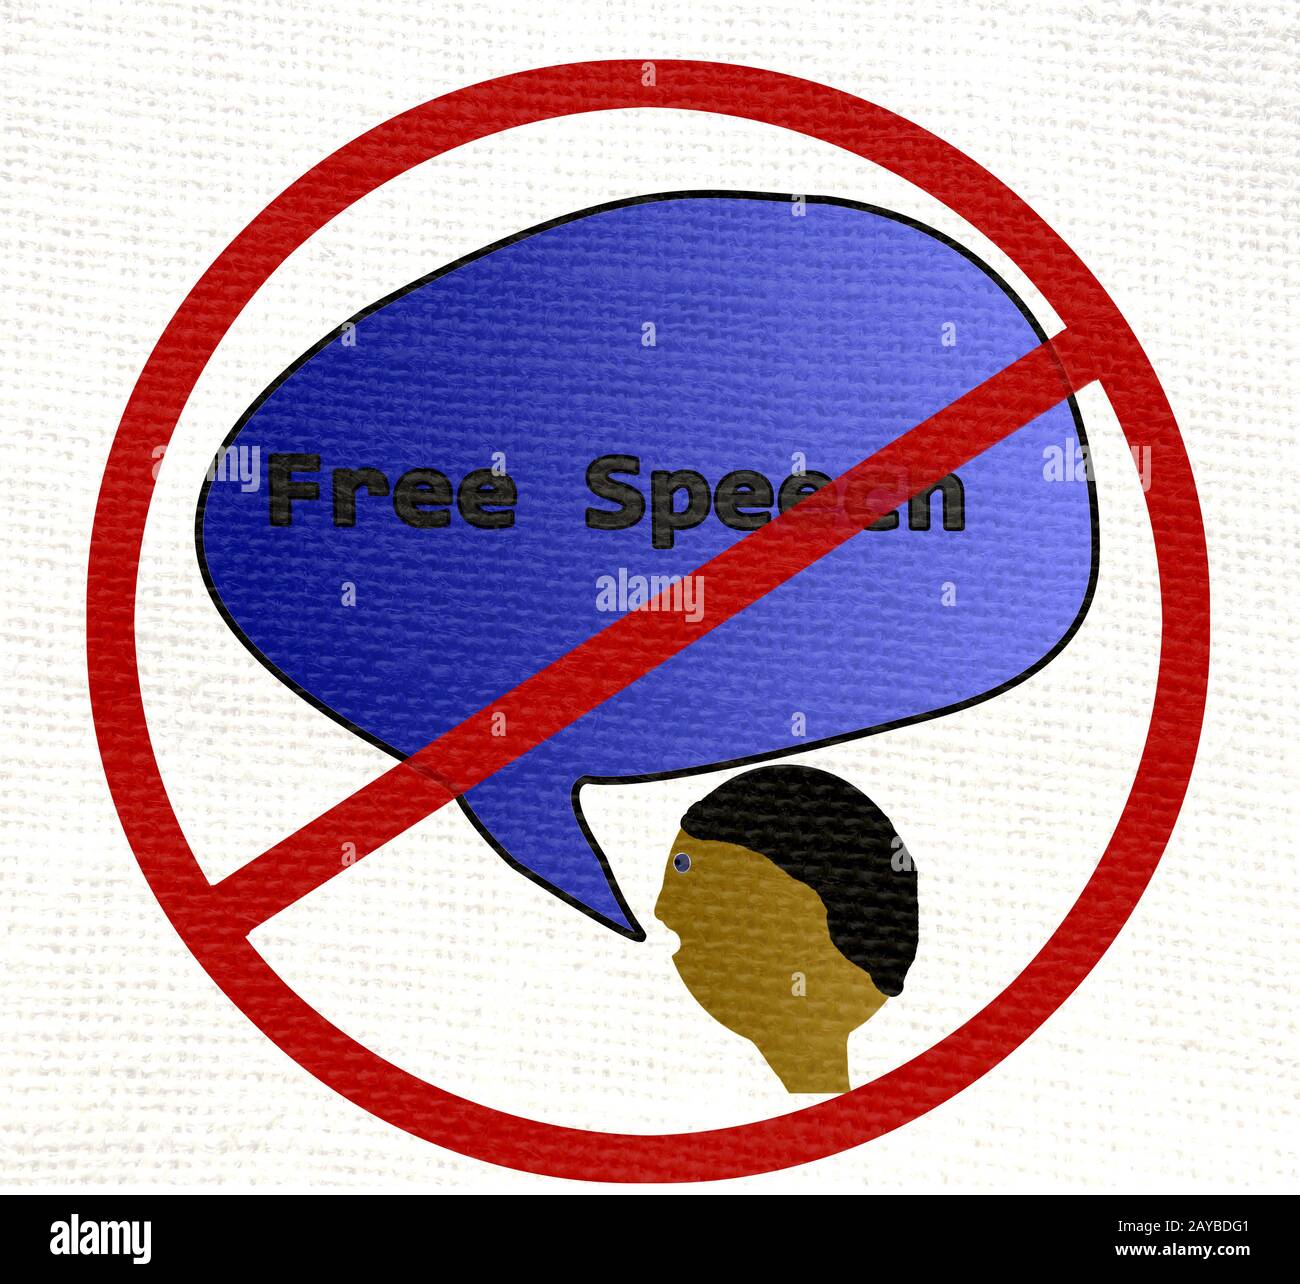 Free Speech censorship concept Stock Photo